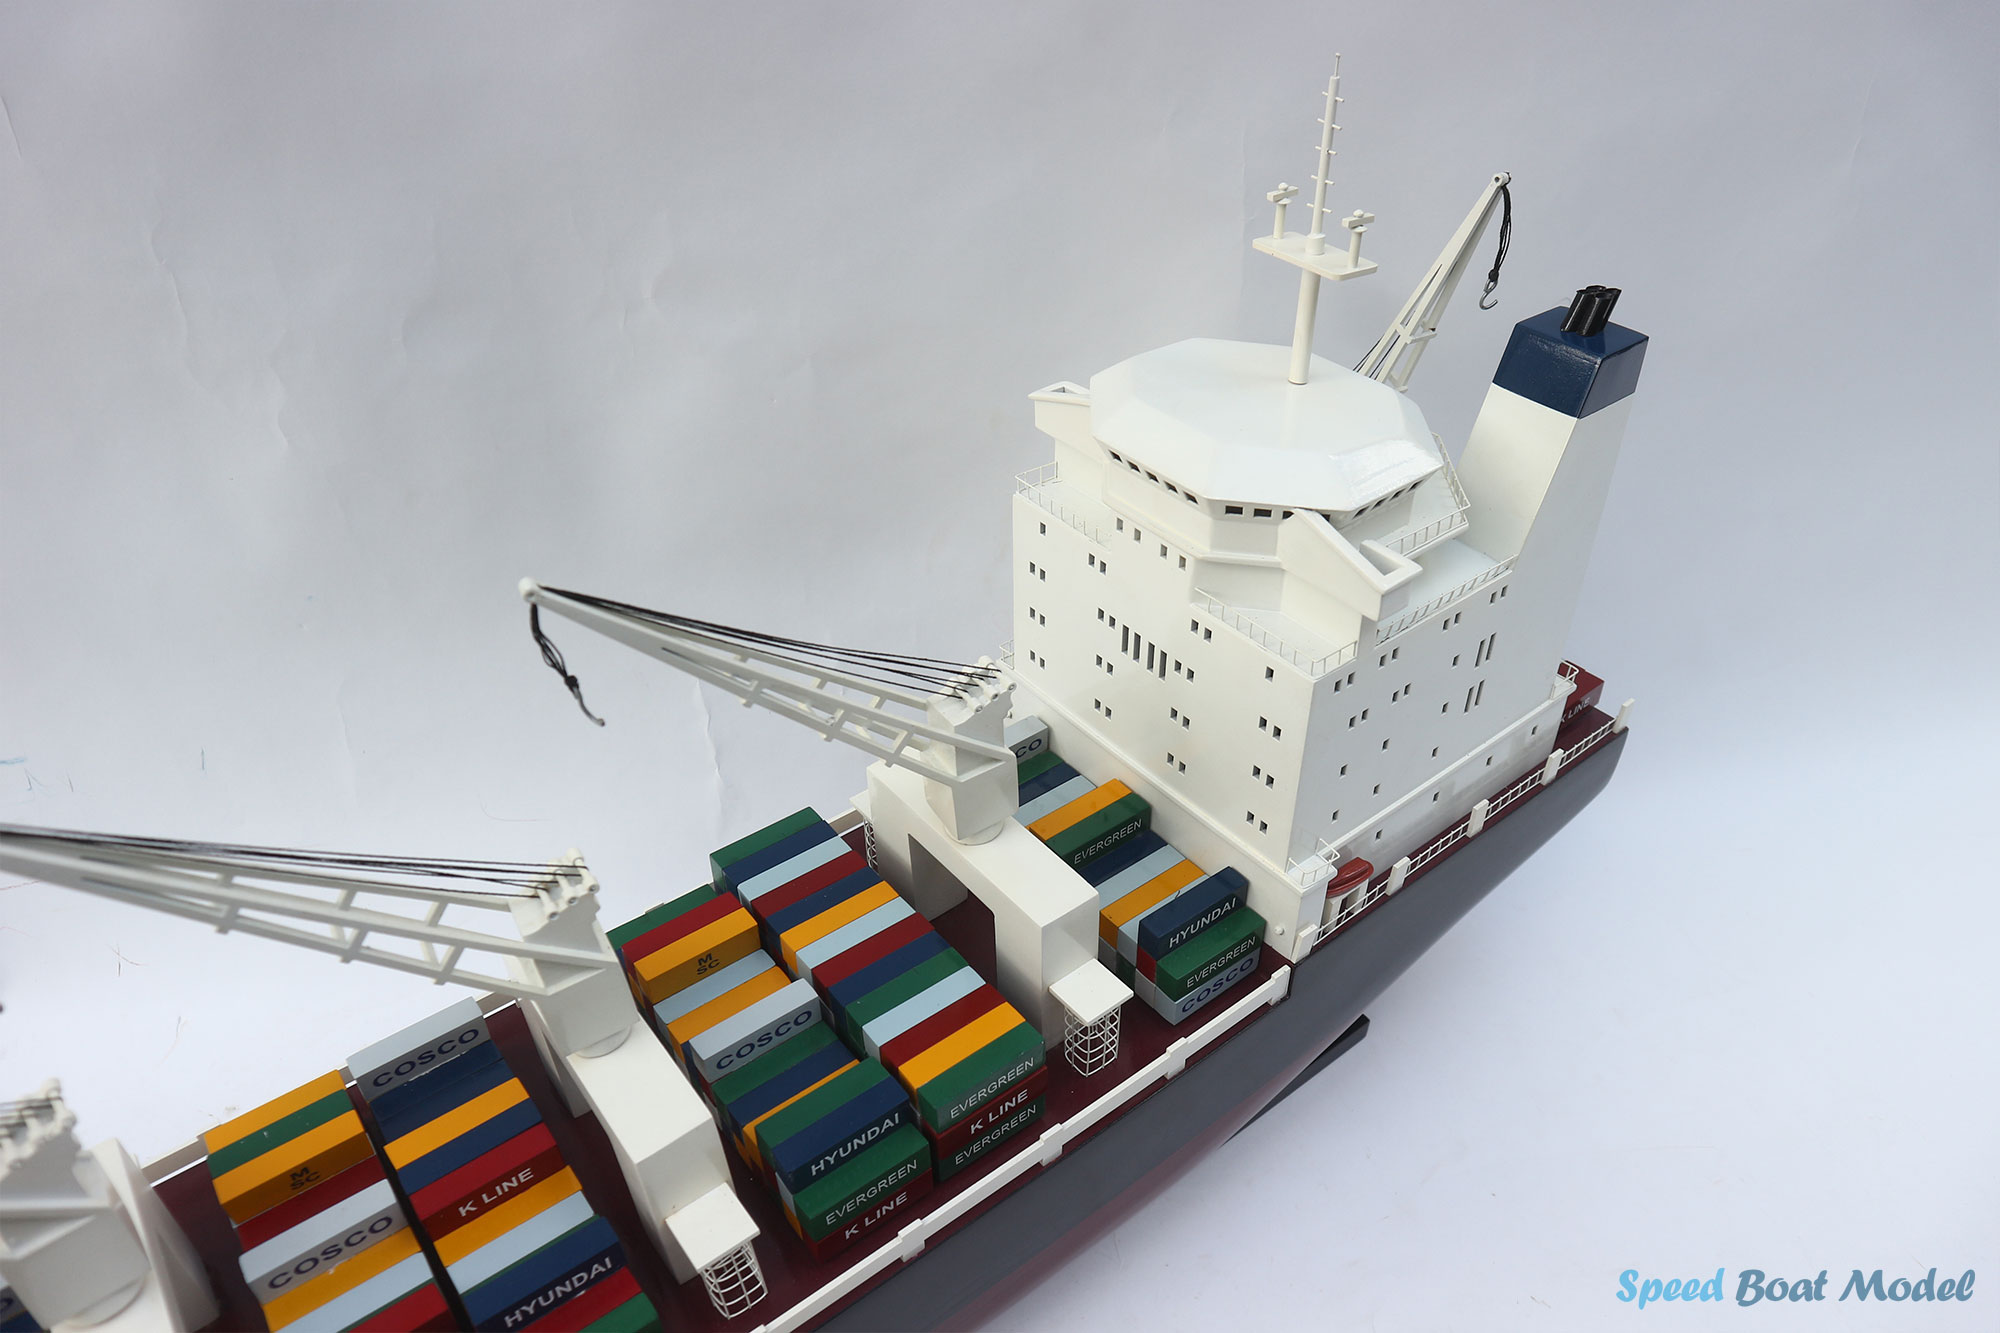 General Cargo Commercial Ship Model 39